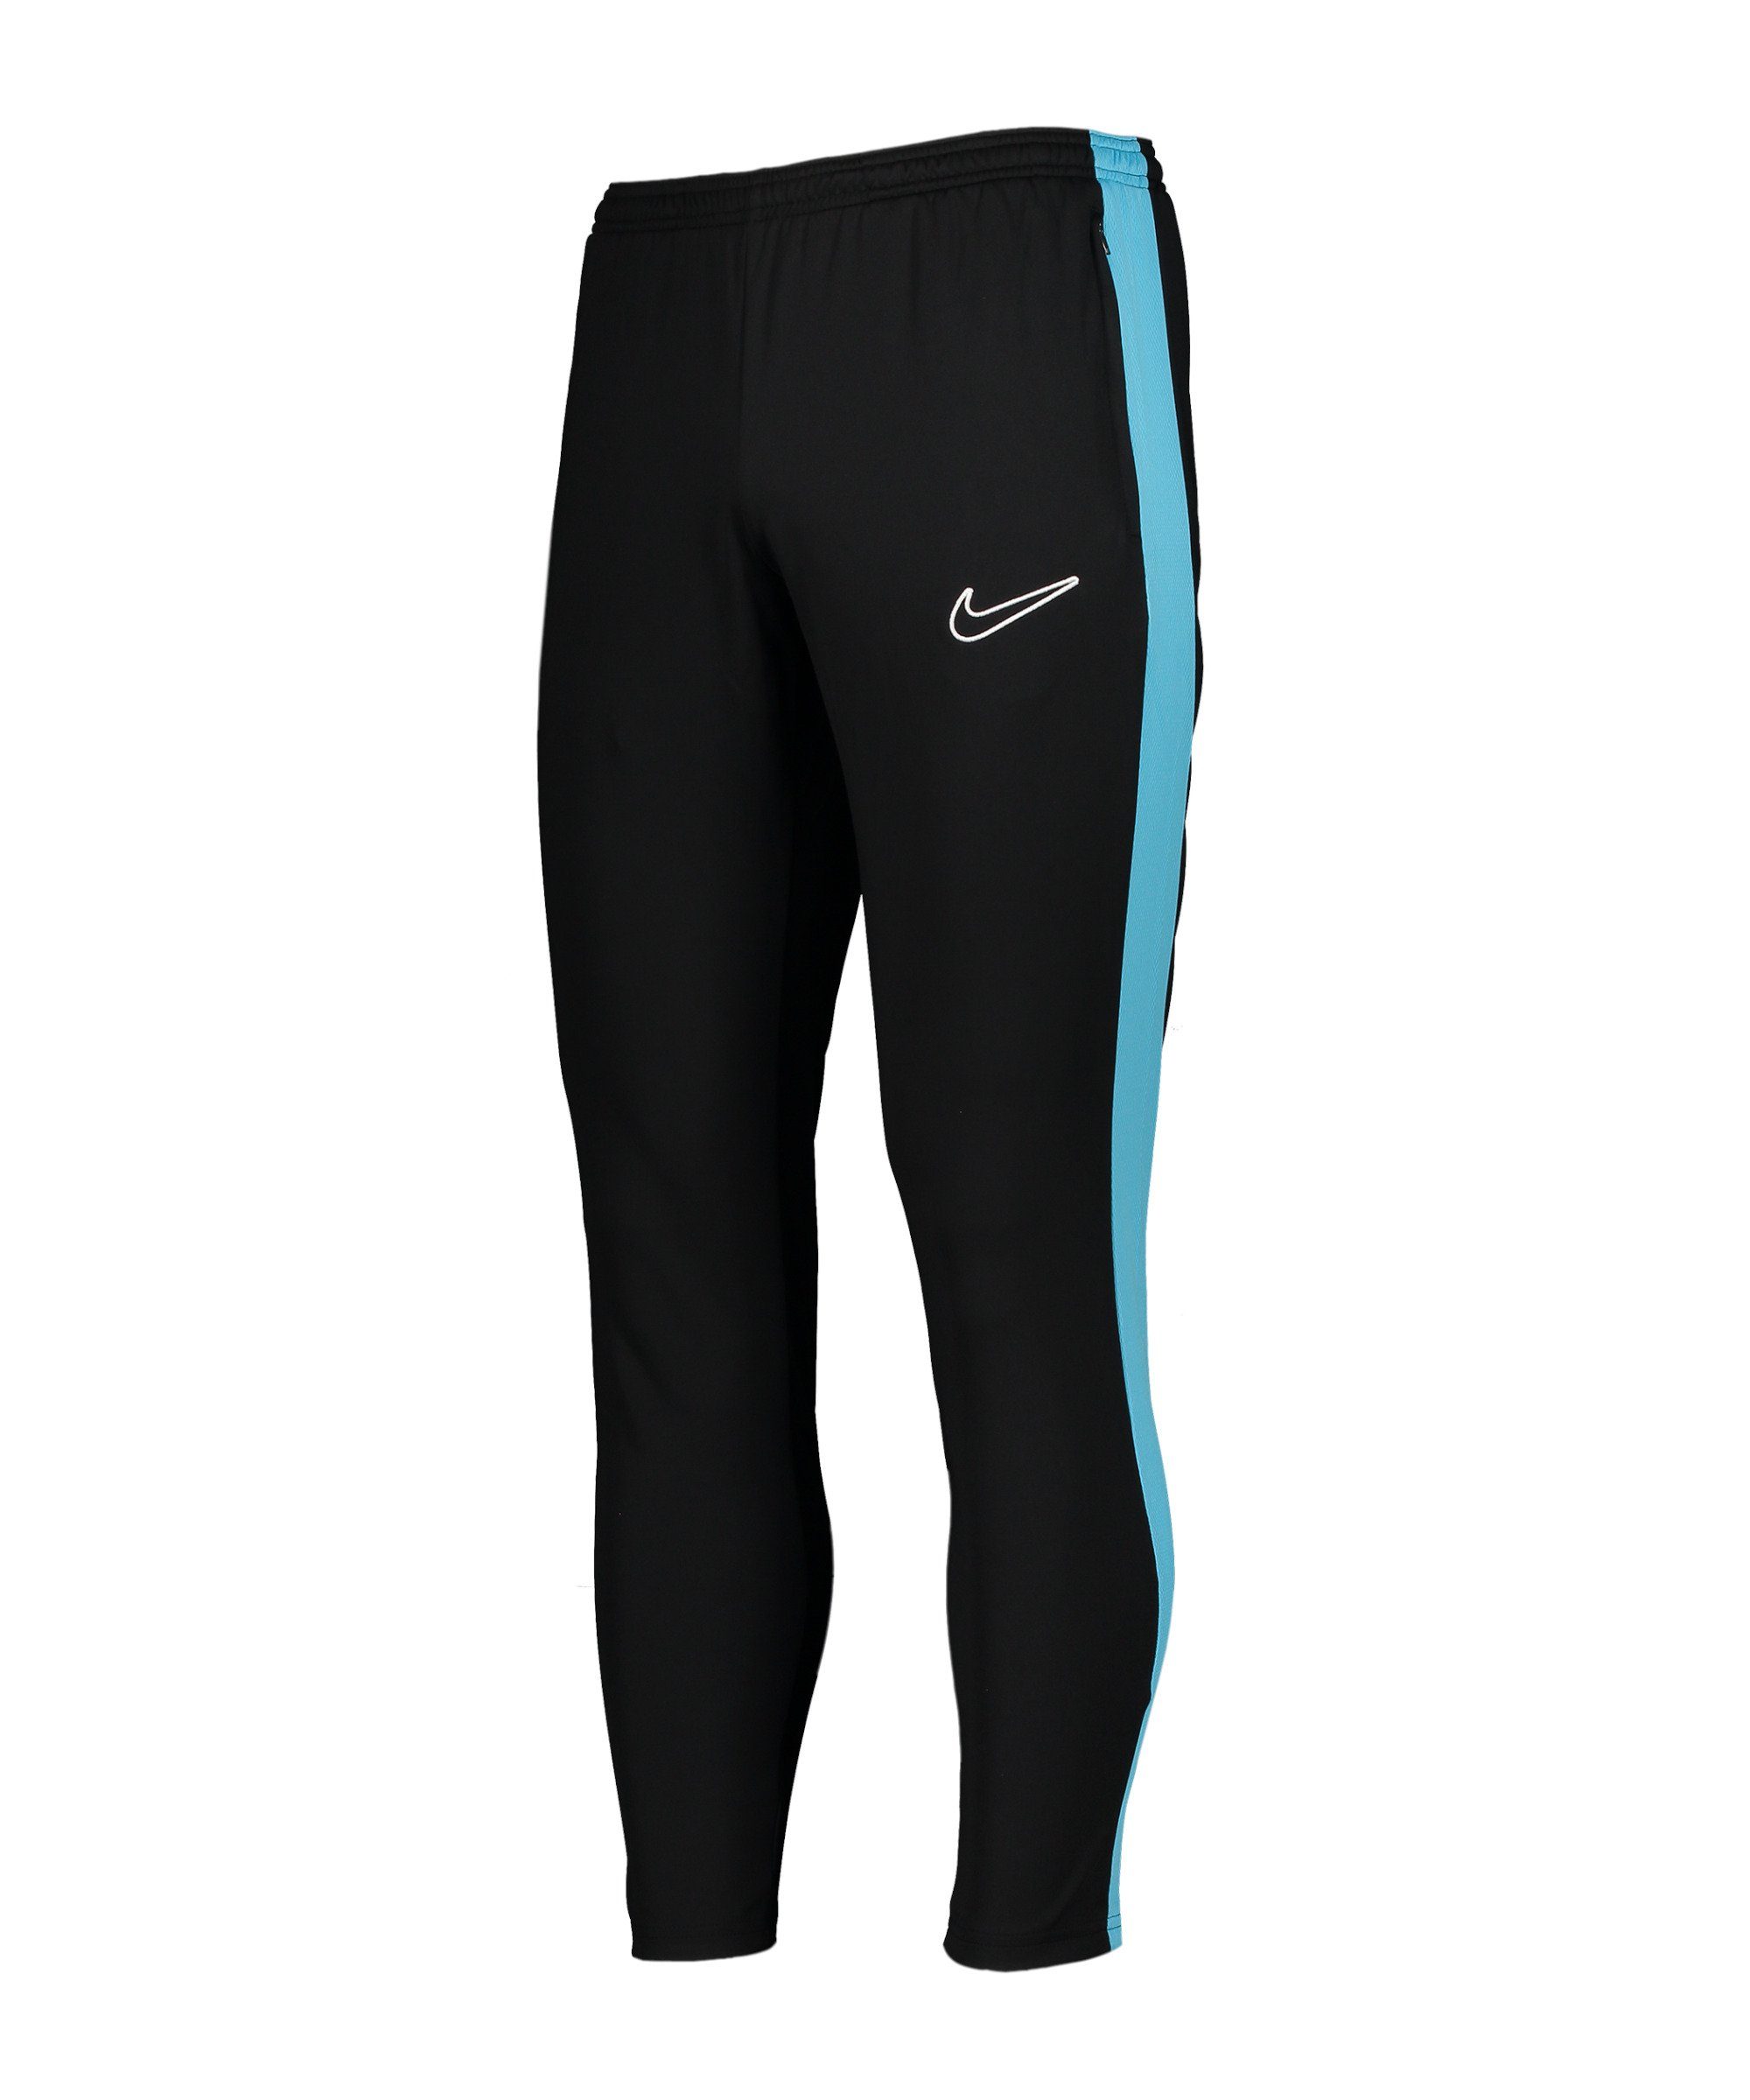 schwarzschwarzblau Academy Sporthose Nike Trainingshose